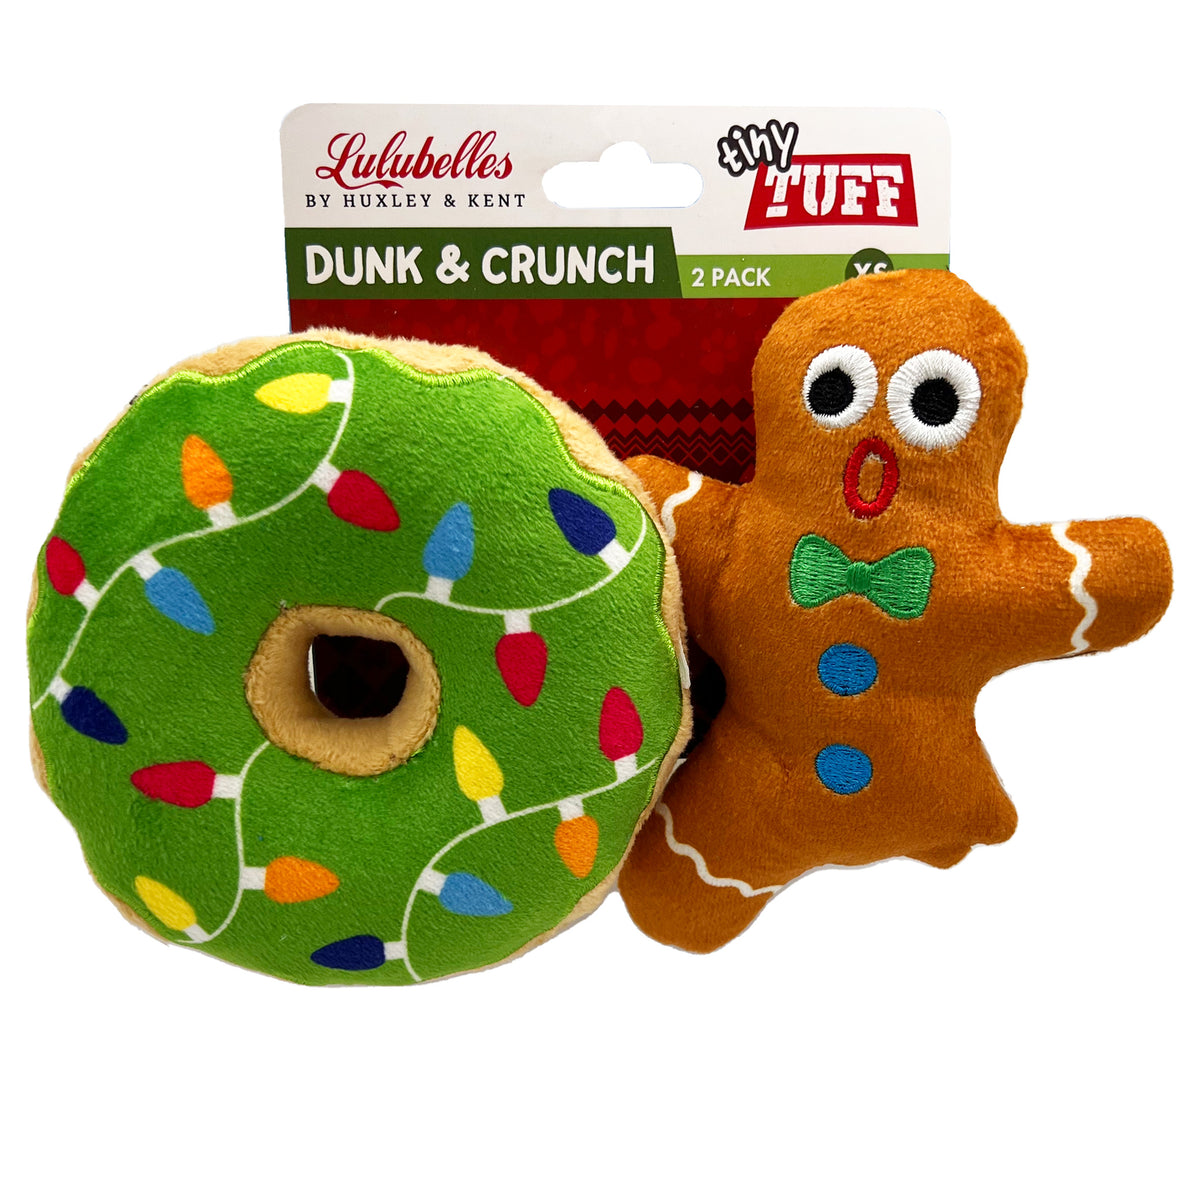 Tiny Tuff Dunk &amp; Crunch 2pk